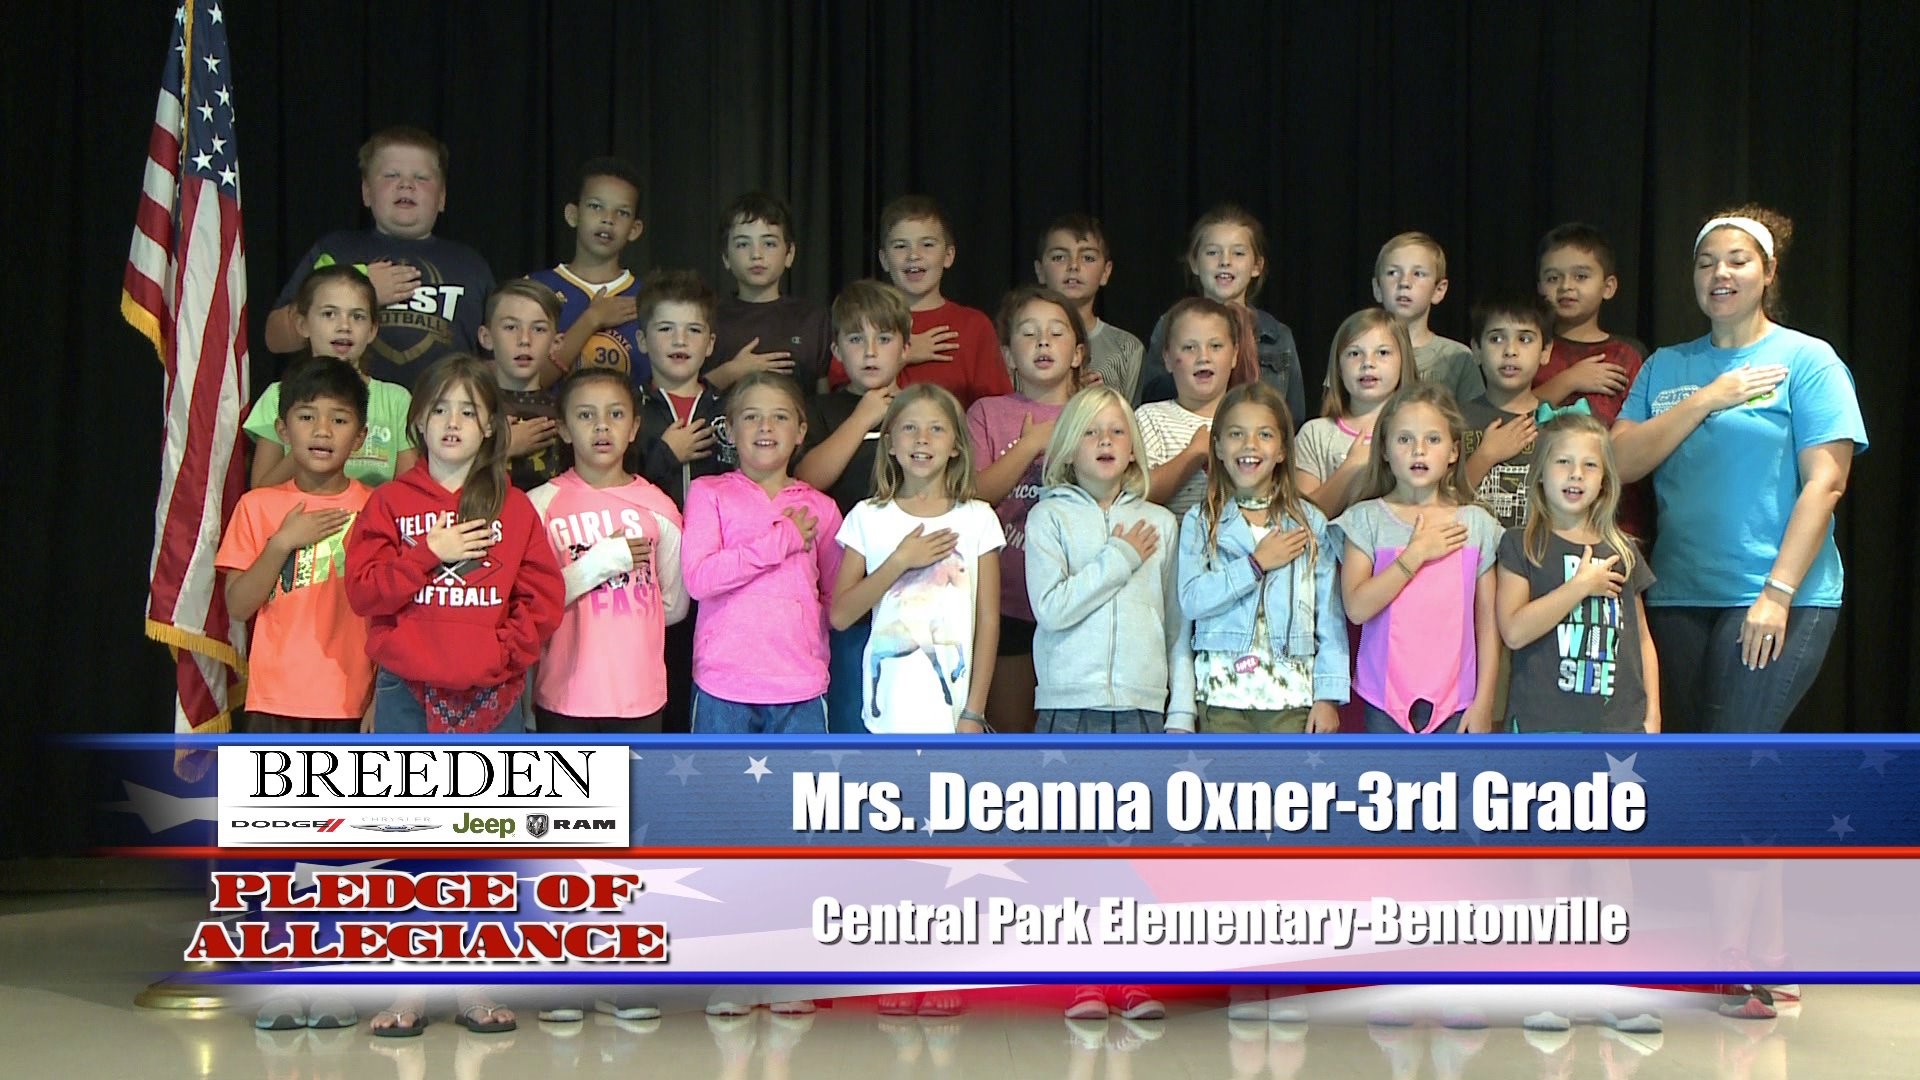 Mrs. Deanna Oxner  3rd Grade  Central Park Elementary  Bentonville